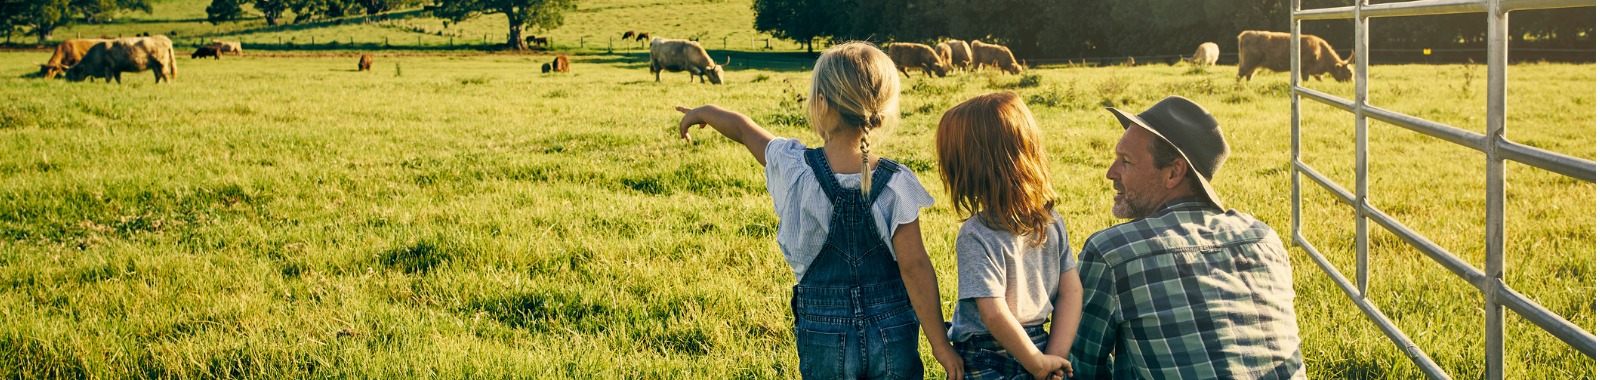 kids on farm